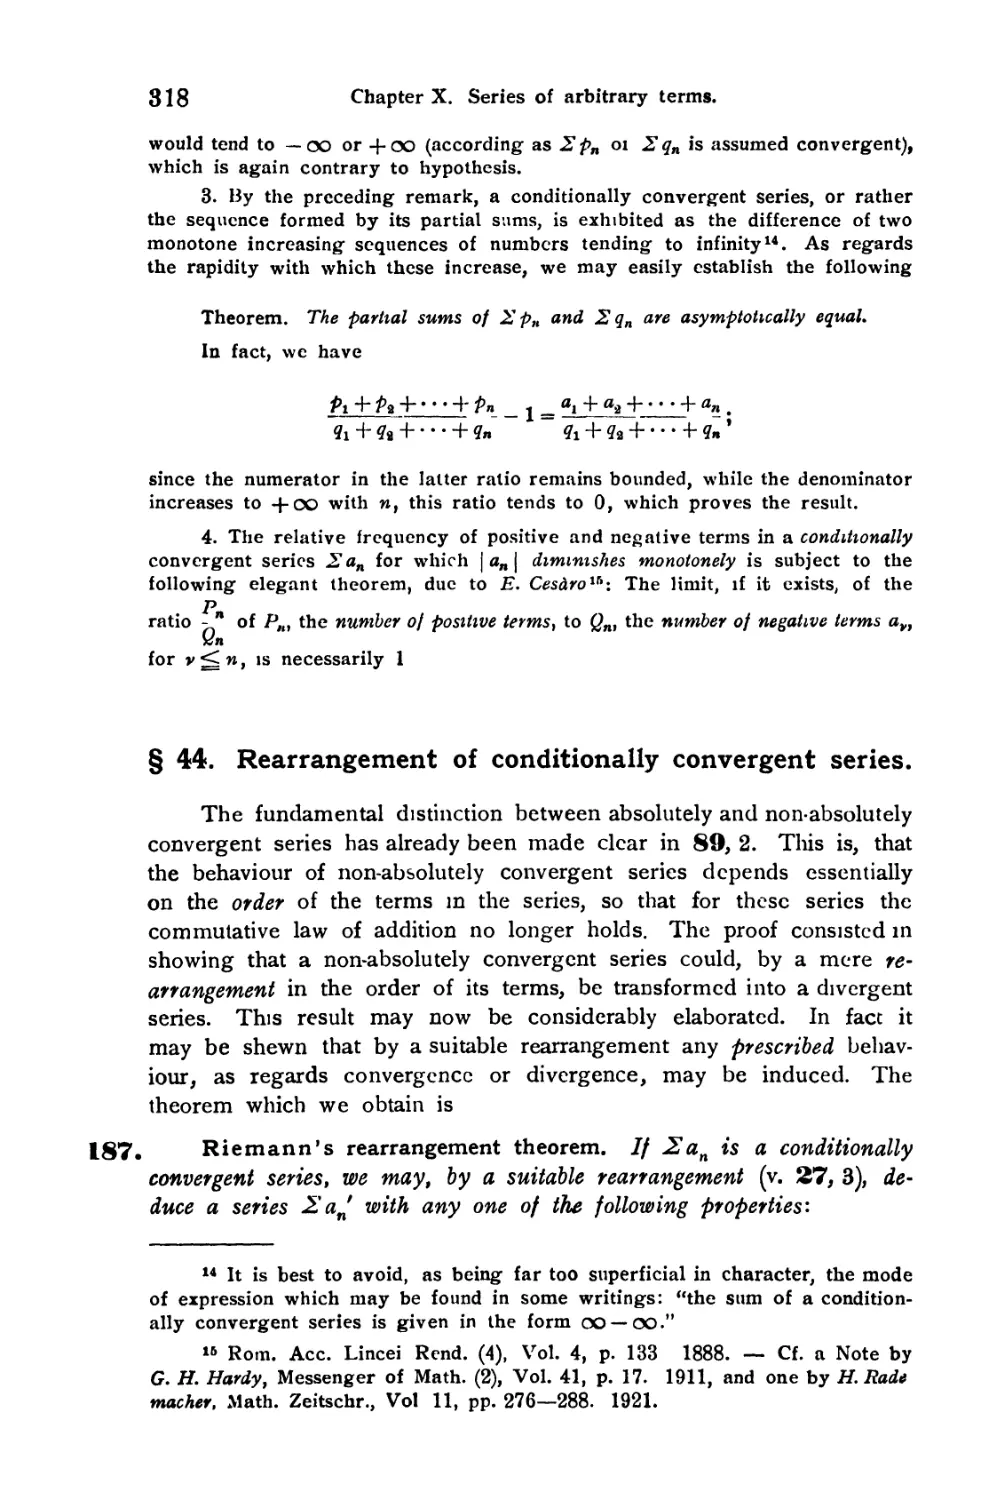 § 44. Rearrangement of conditionally convergent series